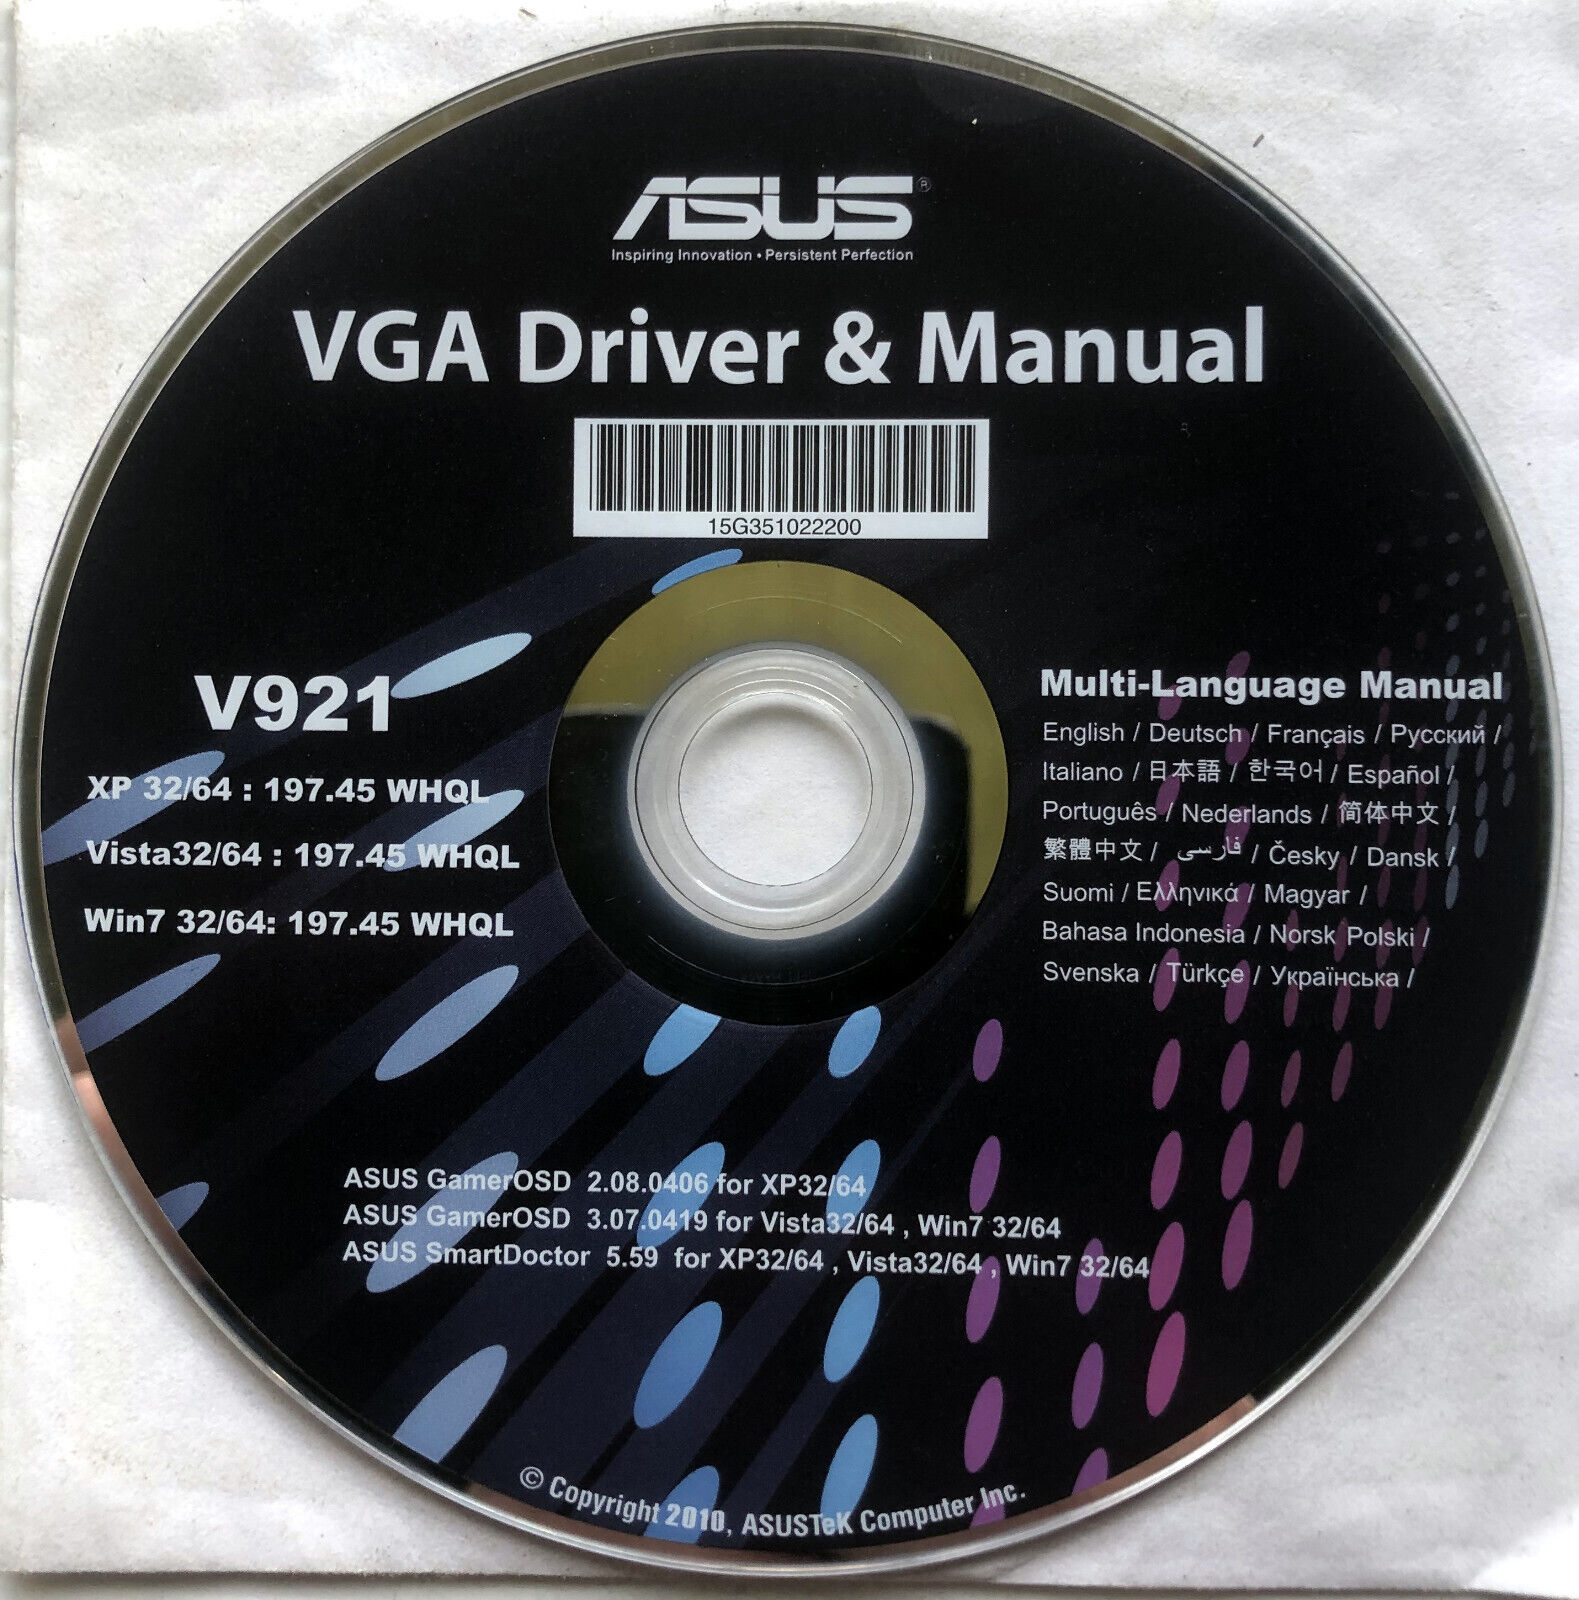 ASUS GamerOSD VGA Driver & Manual V921 CD Windows XP, Vista, 7